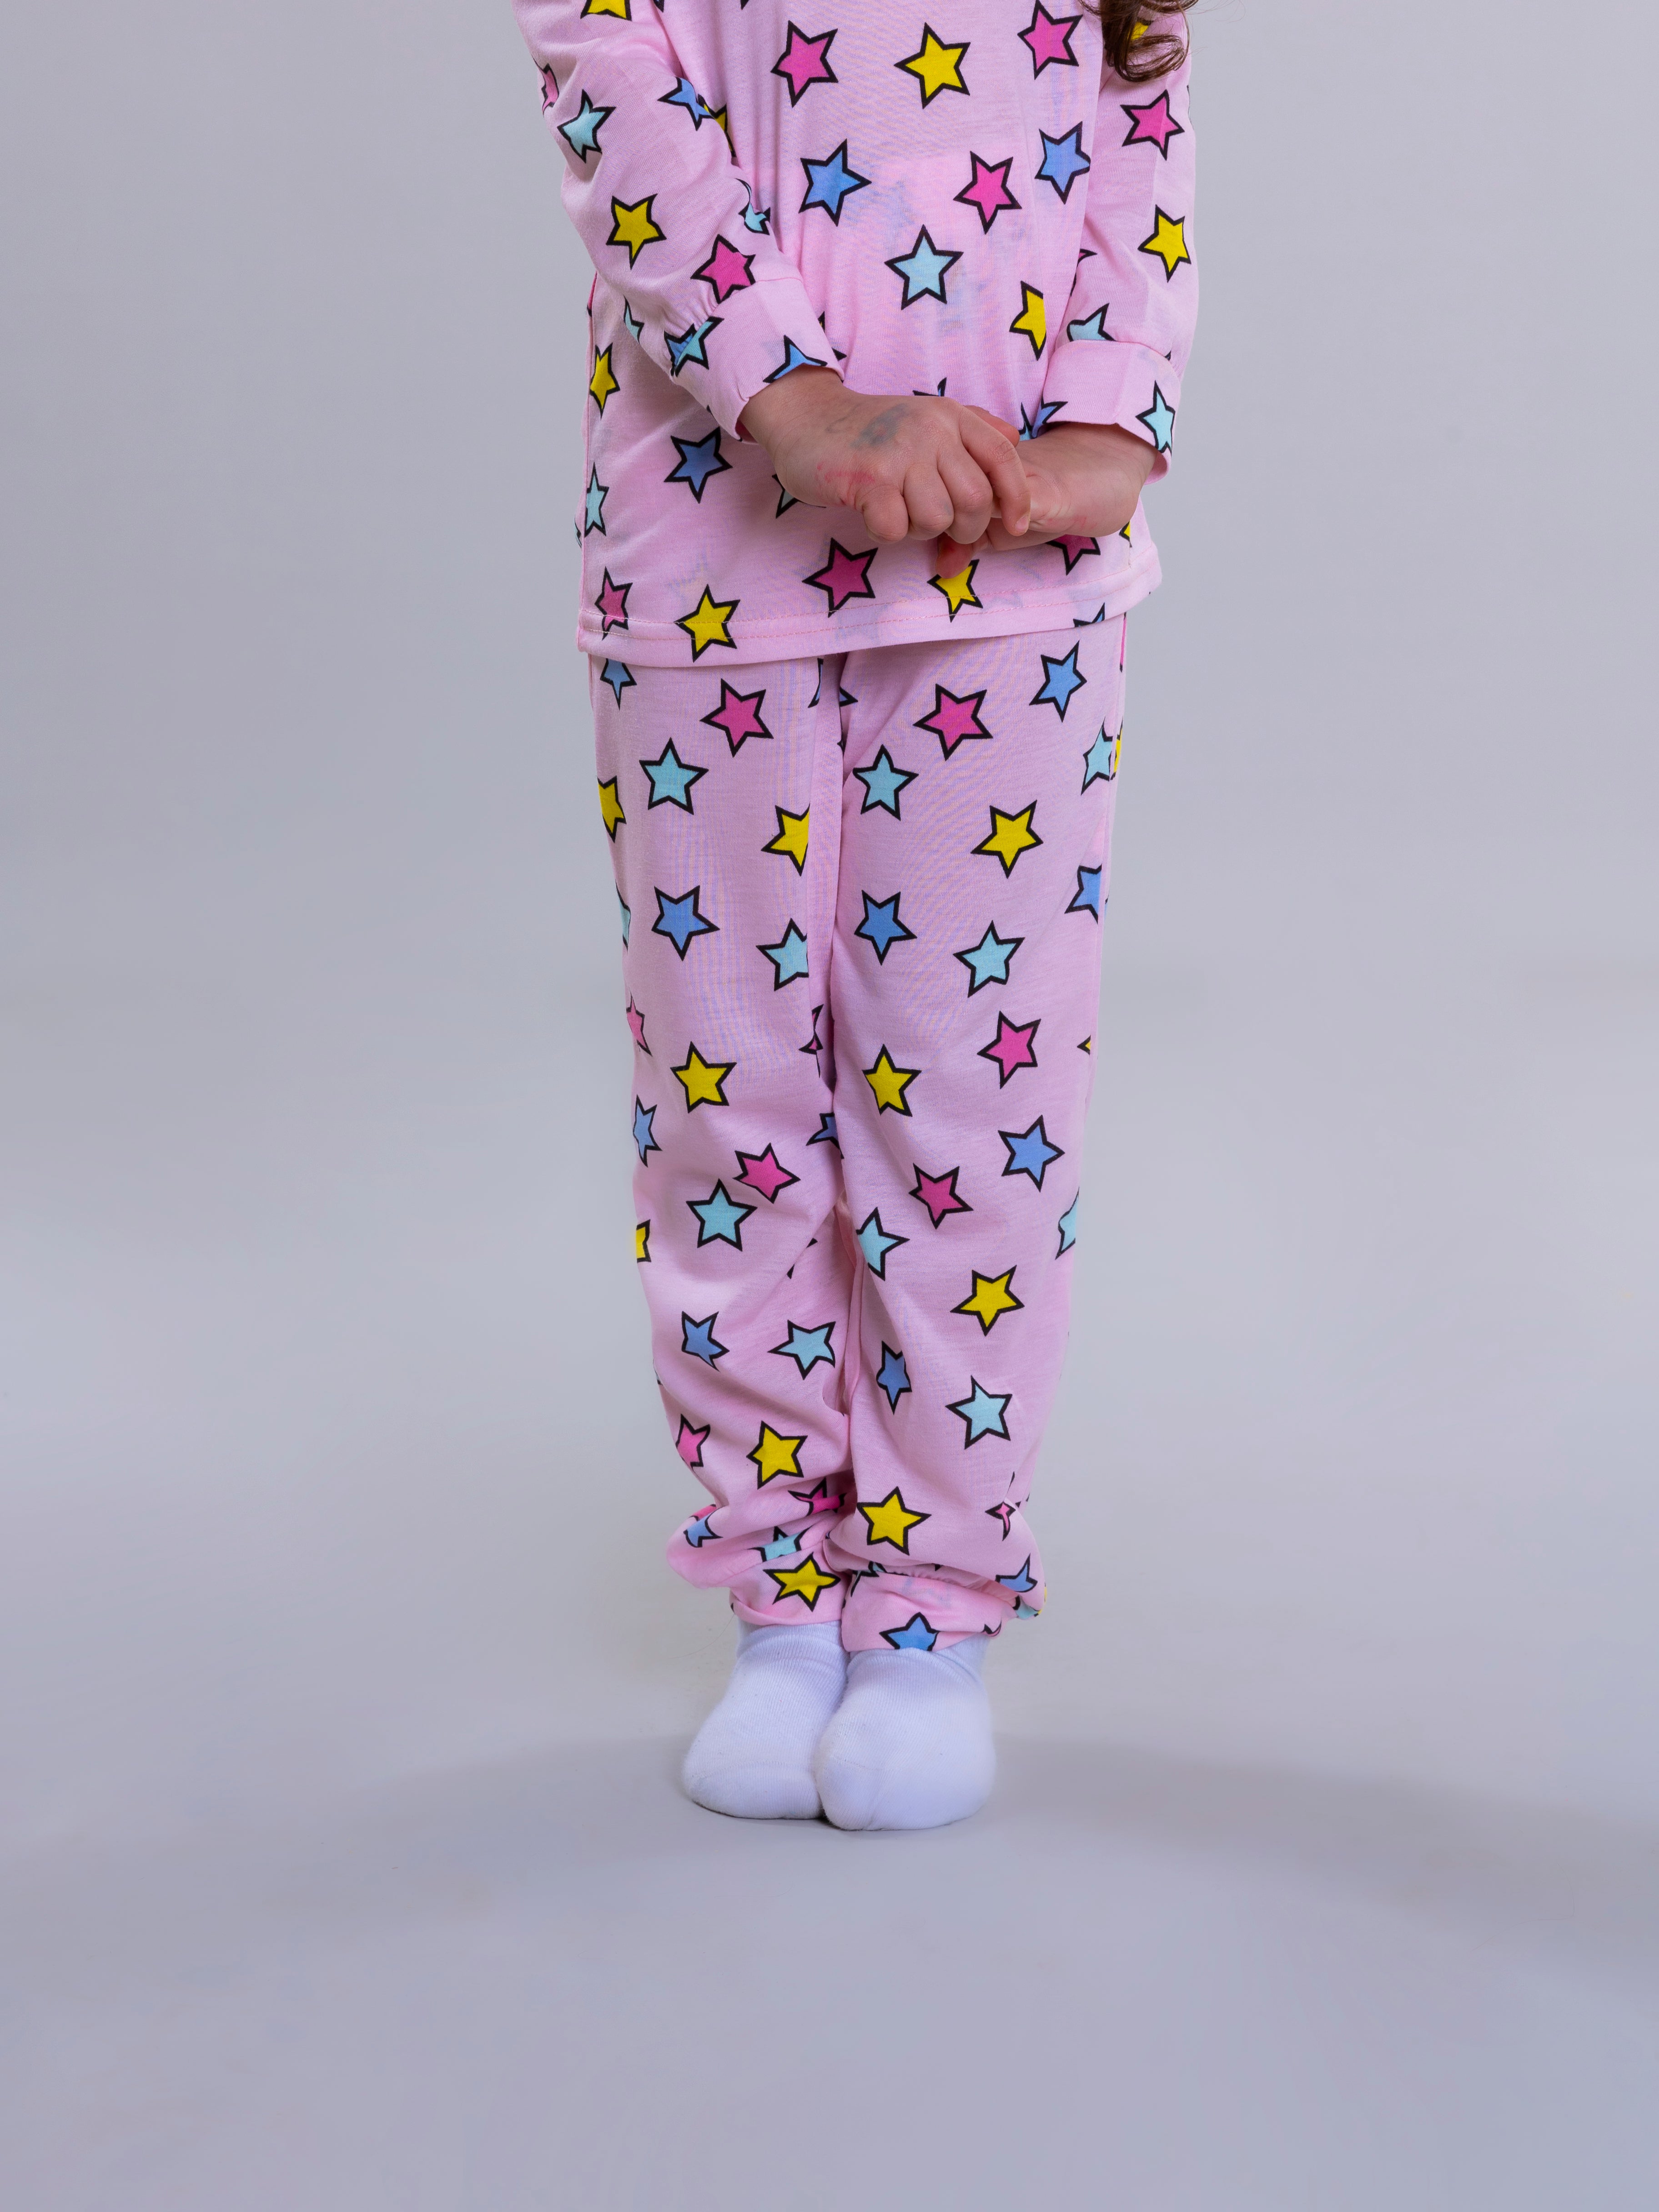 Colorful Stars Pyjama Set For Girls - Pink - Pear